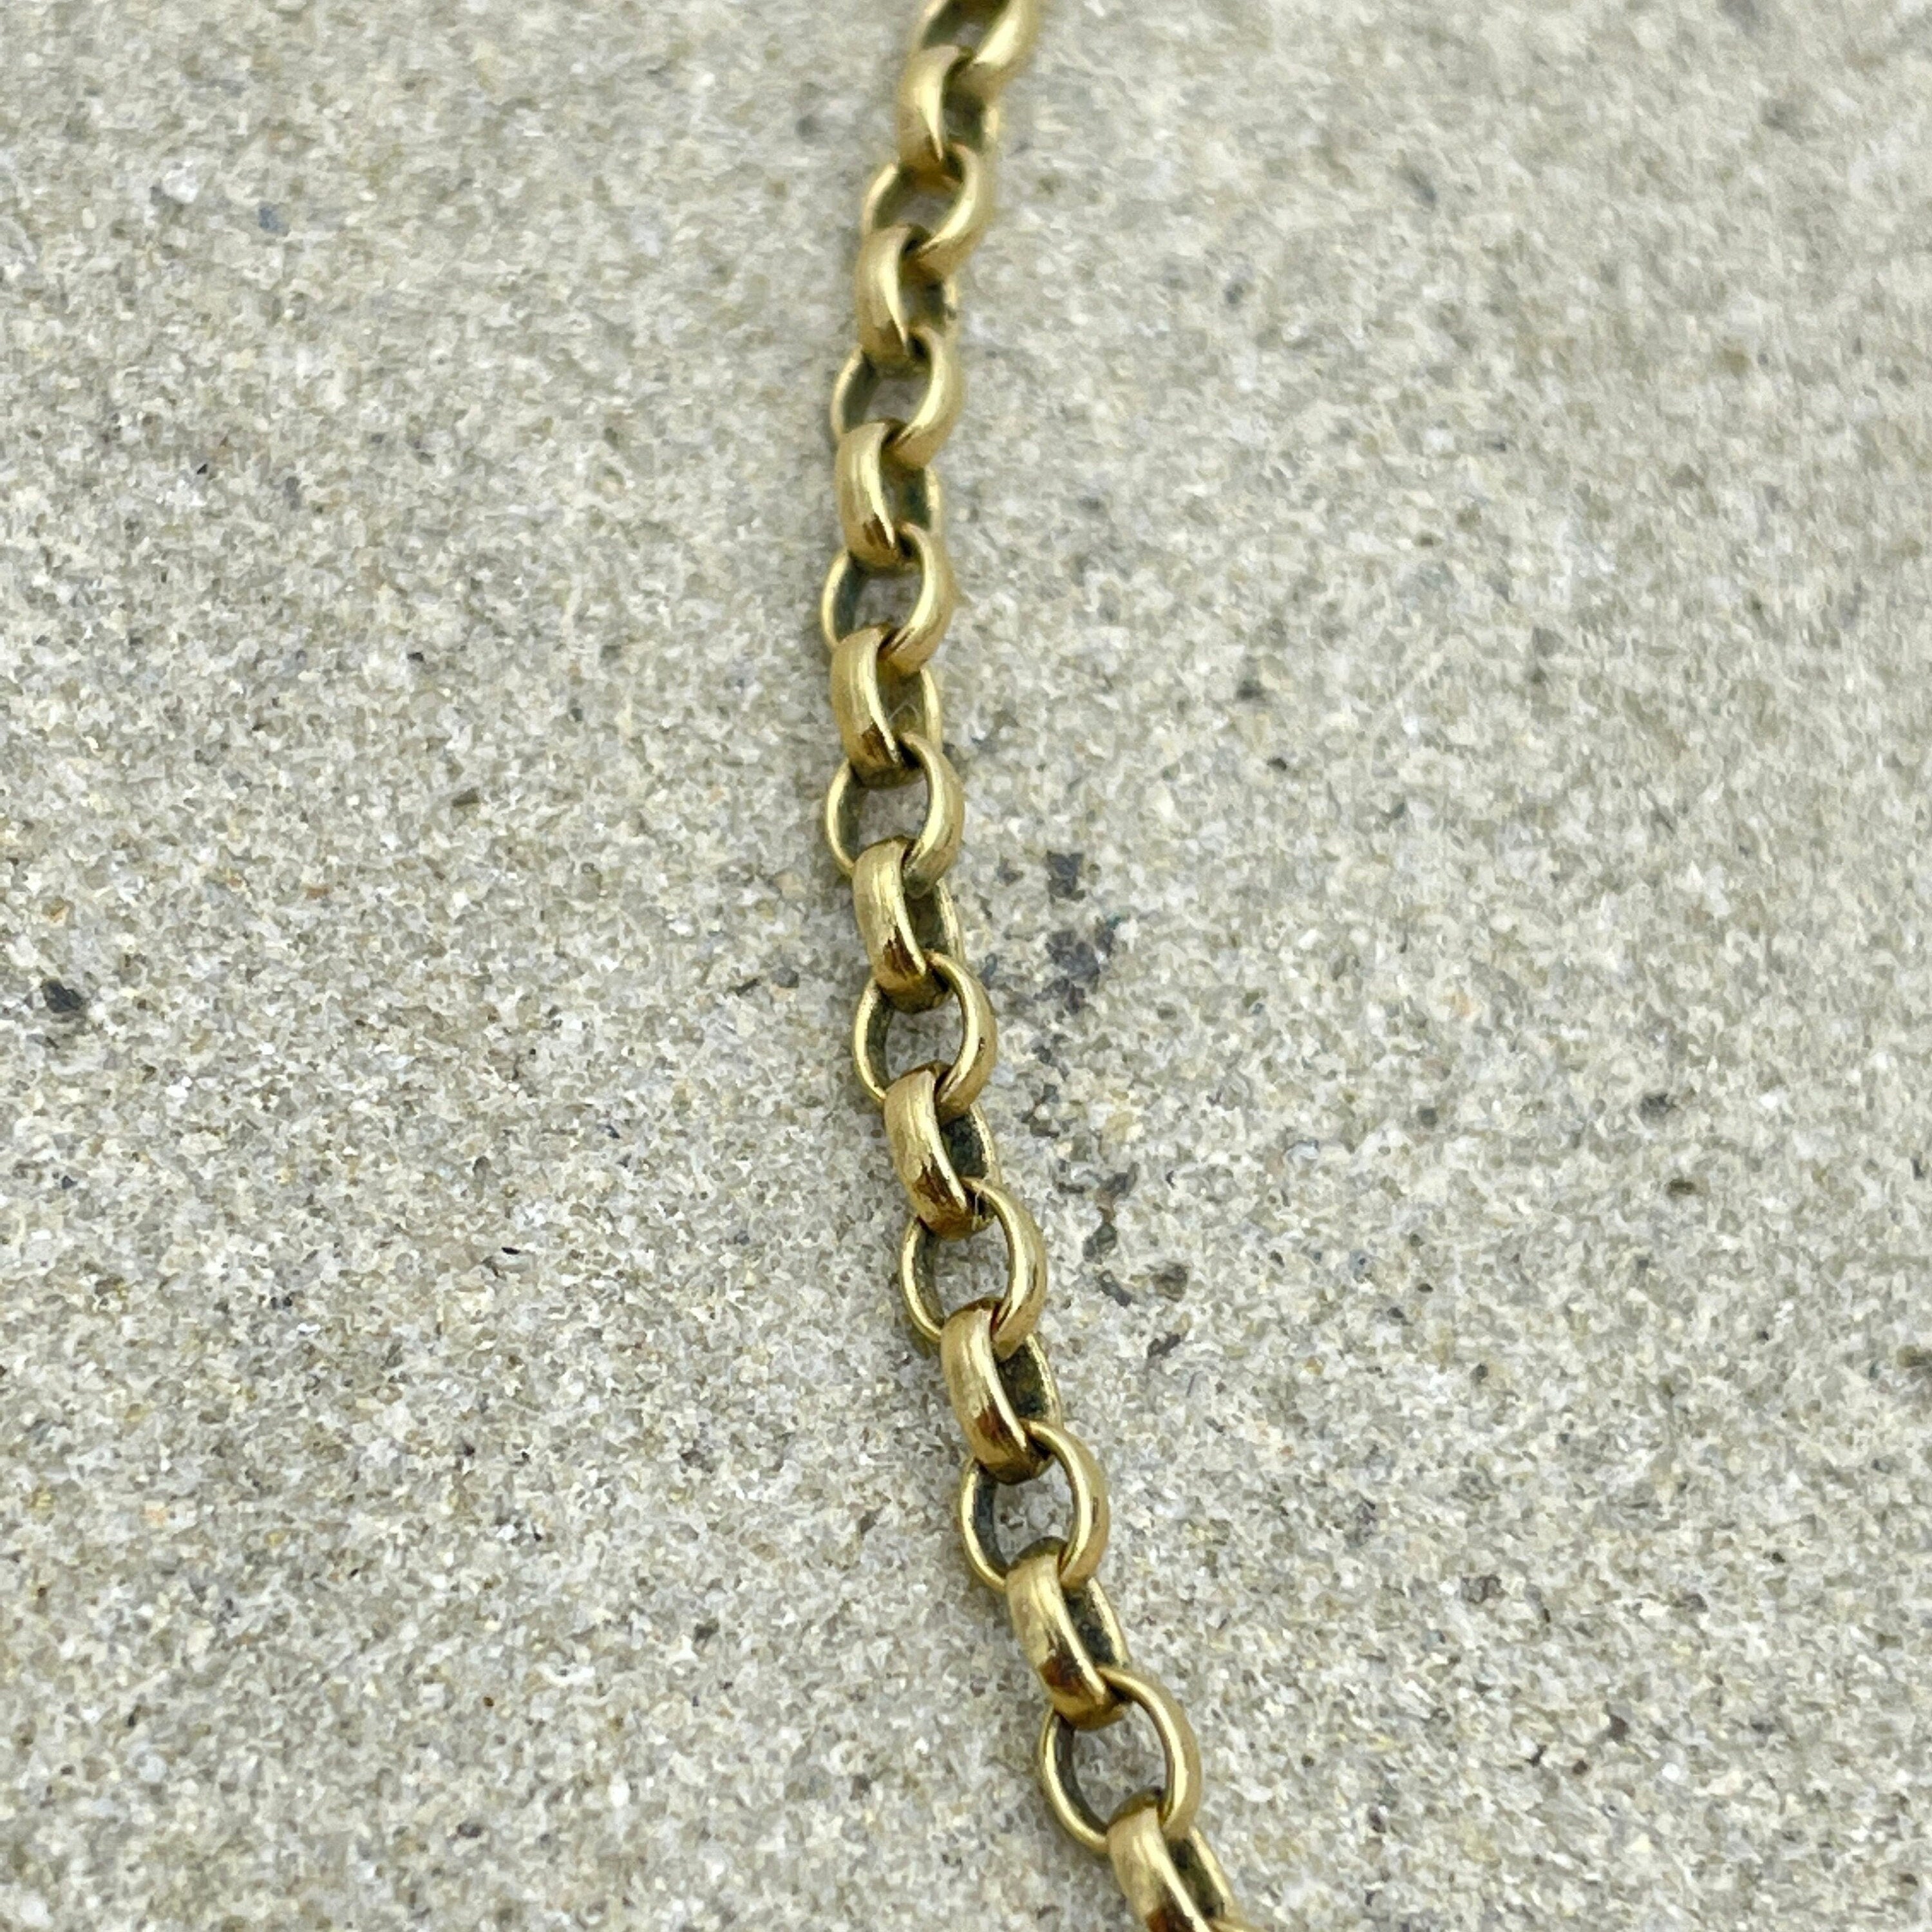 Vintage 9ct gold belcher link chain. 15 inch/ 38cm long 4.6 grams